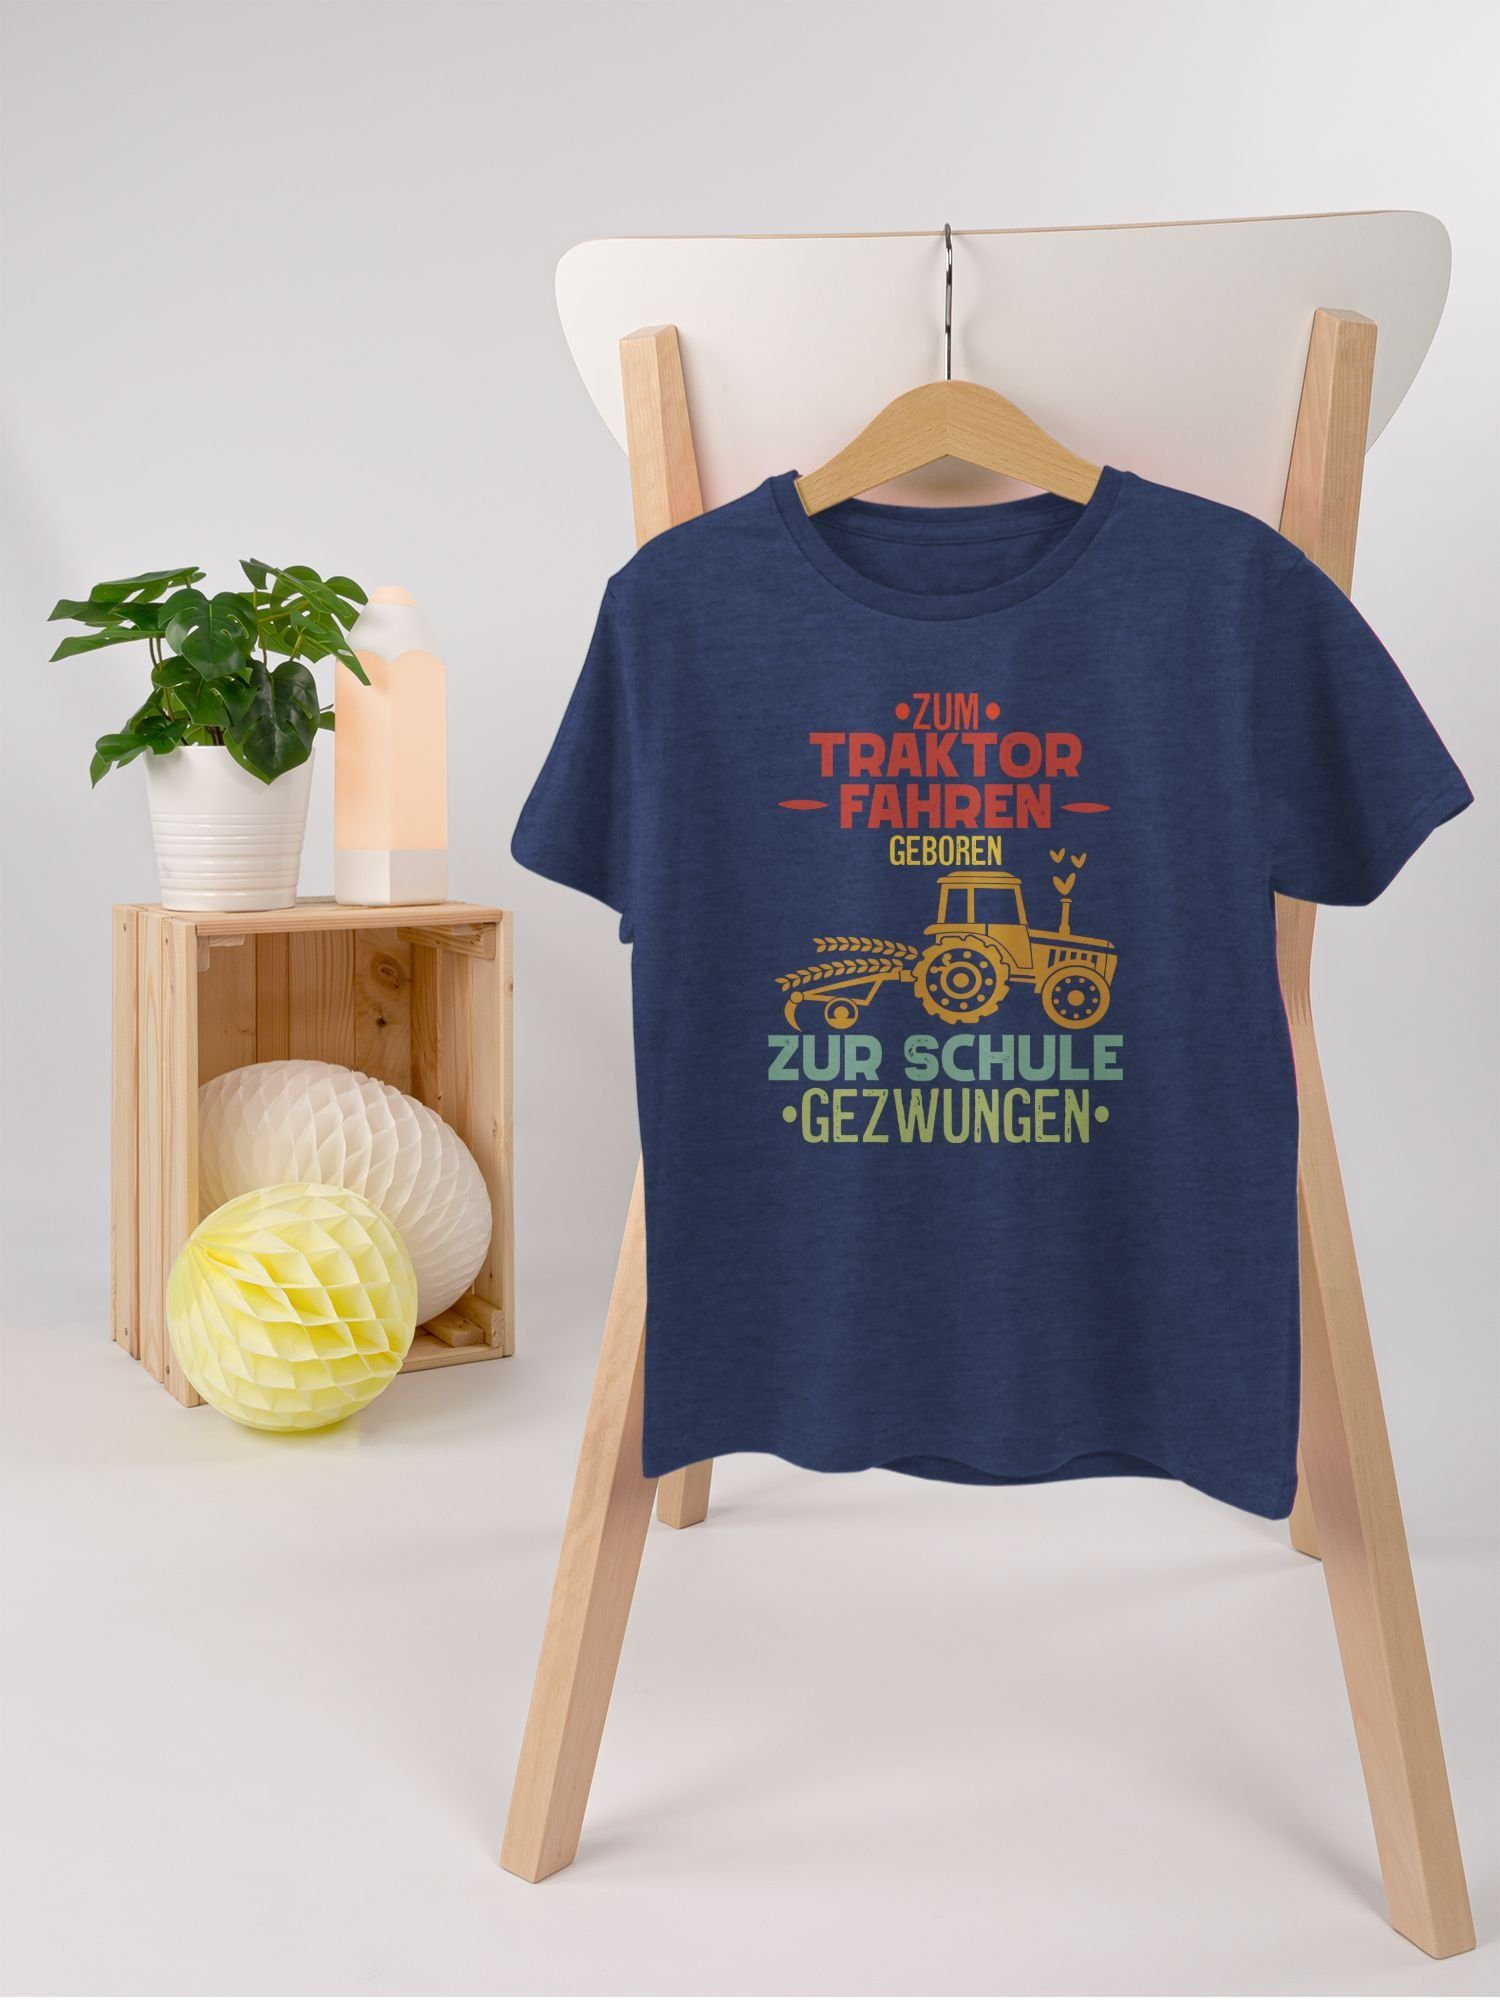 Shirtracer T-Shirt gezwungen geboren Einschulung zur Vintage fahren Meliert Junge Geschenke Dunkelblau Schulanfang Zum Traktor Schule 03